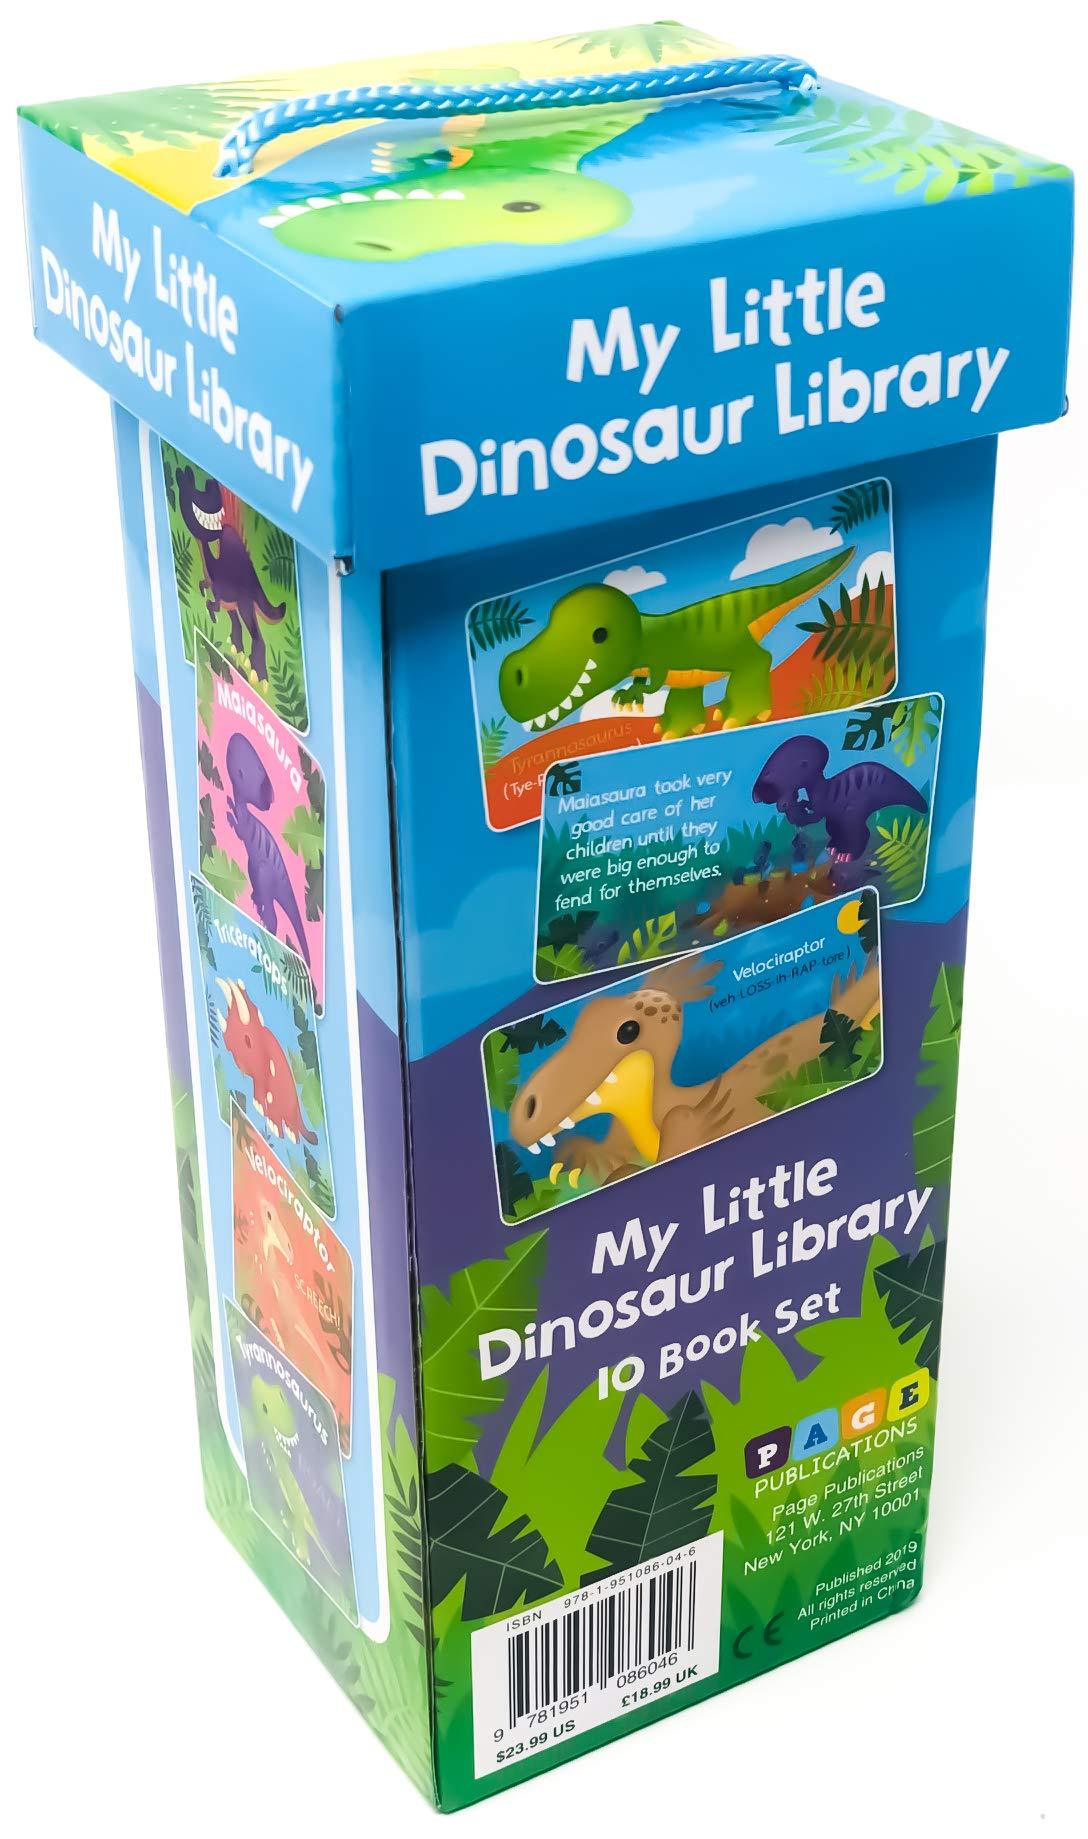 Smithsonian Dinosaurs Fun Box